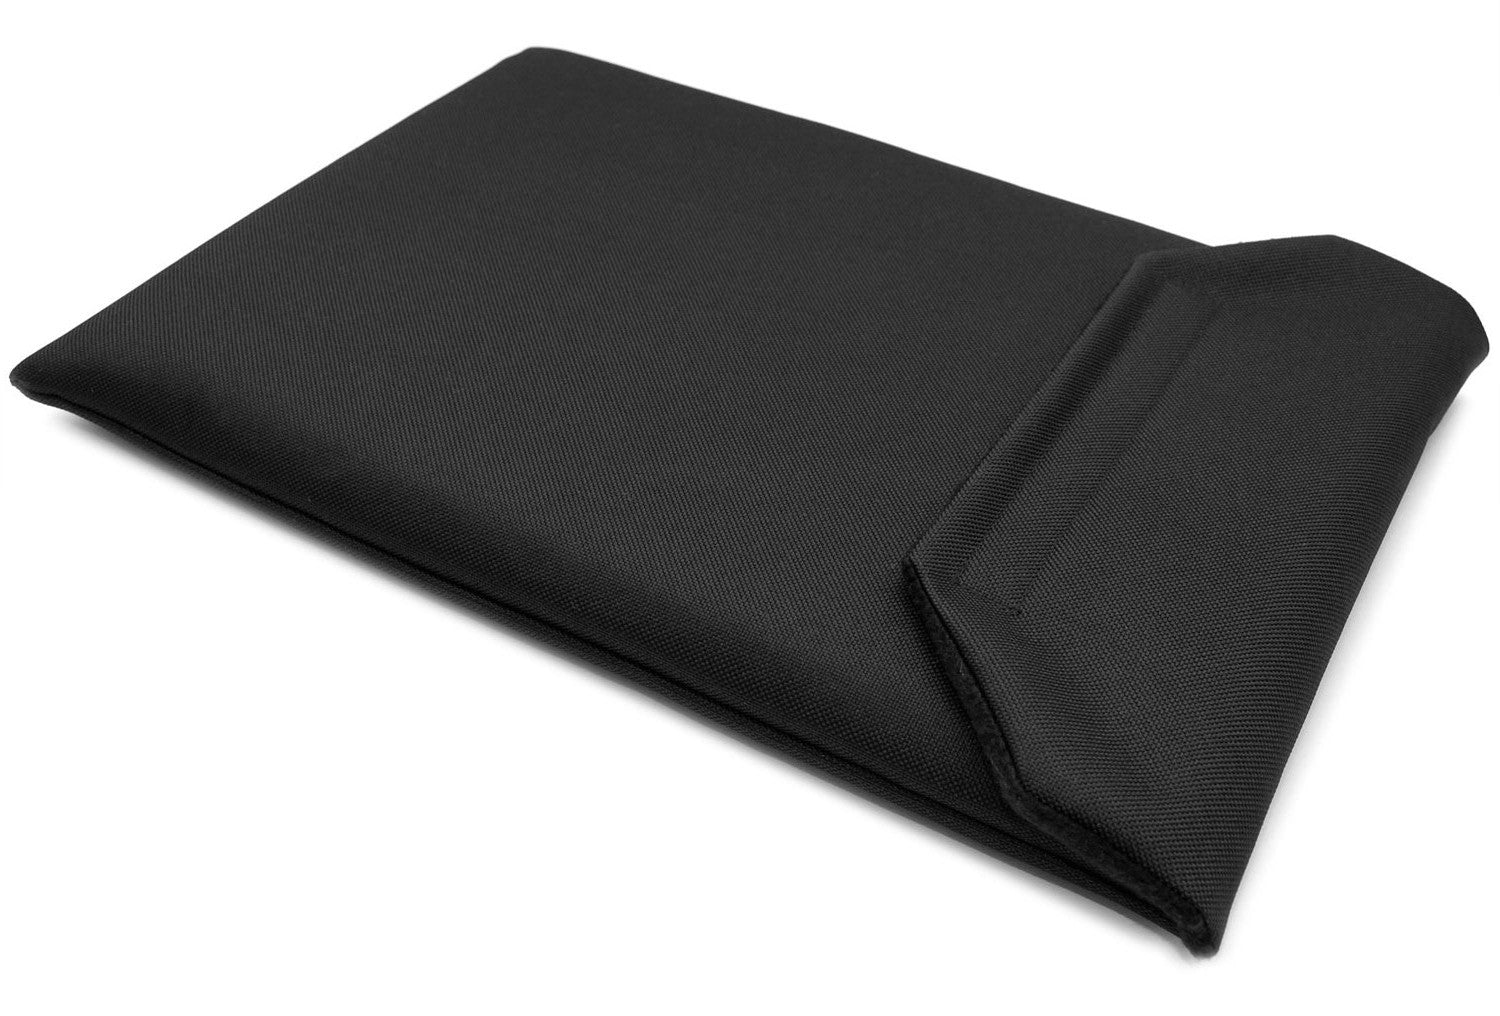 HP Spectre x360 13 Sleeve Case - Black Canvas